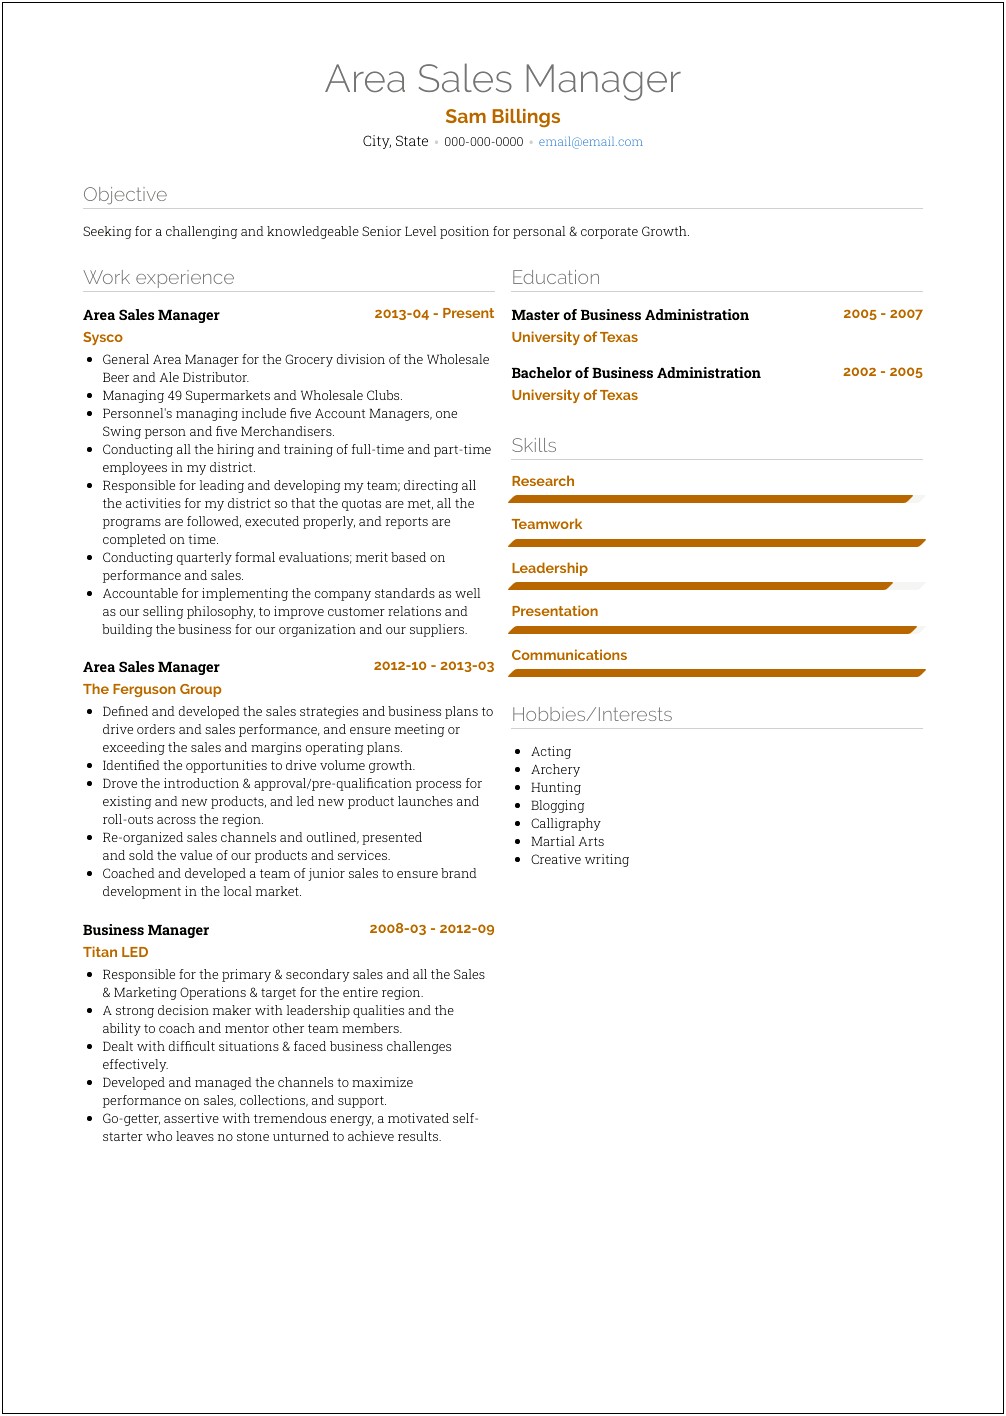 Resume Objective Amazon Area Manager